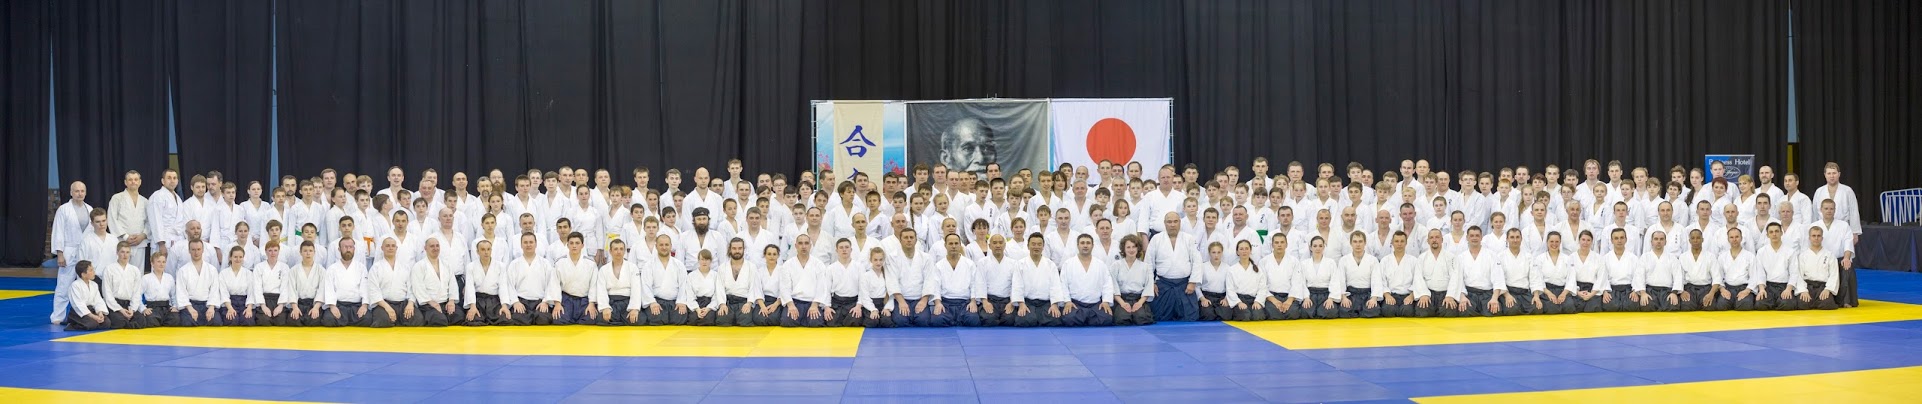 20150529 Aikido seminar 451 456 459